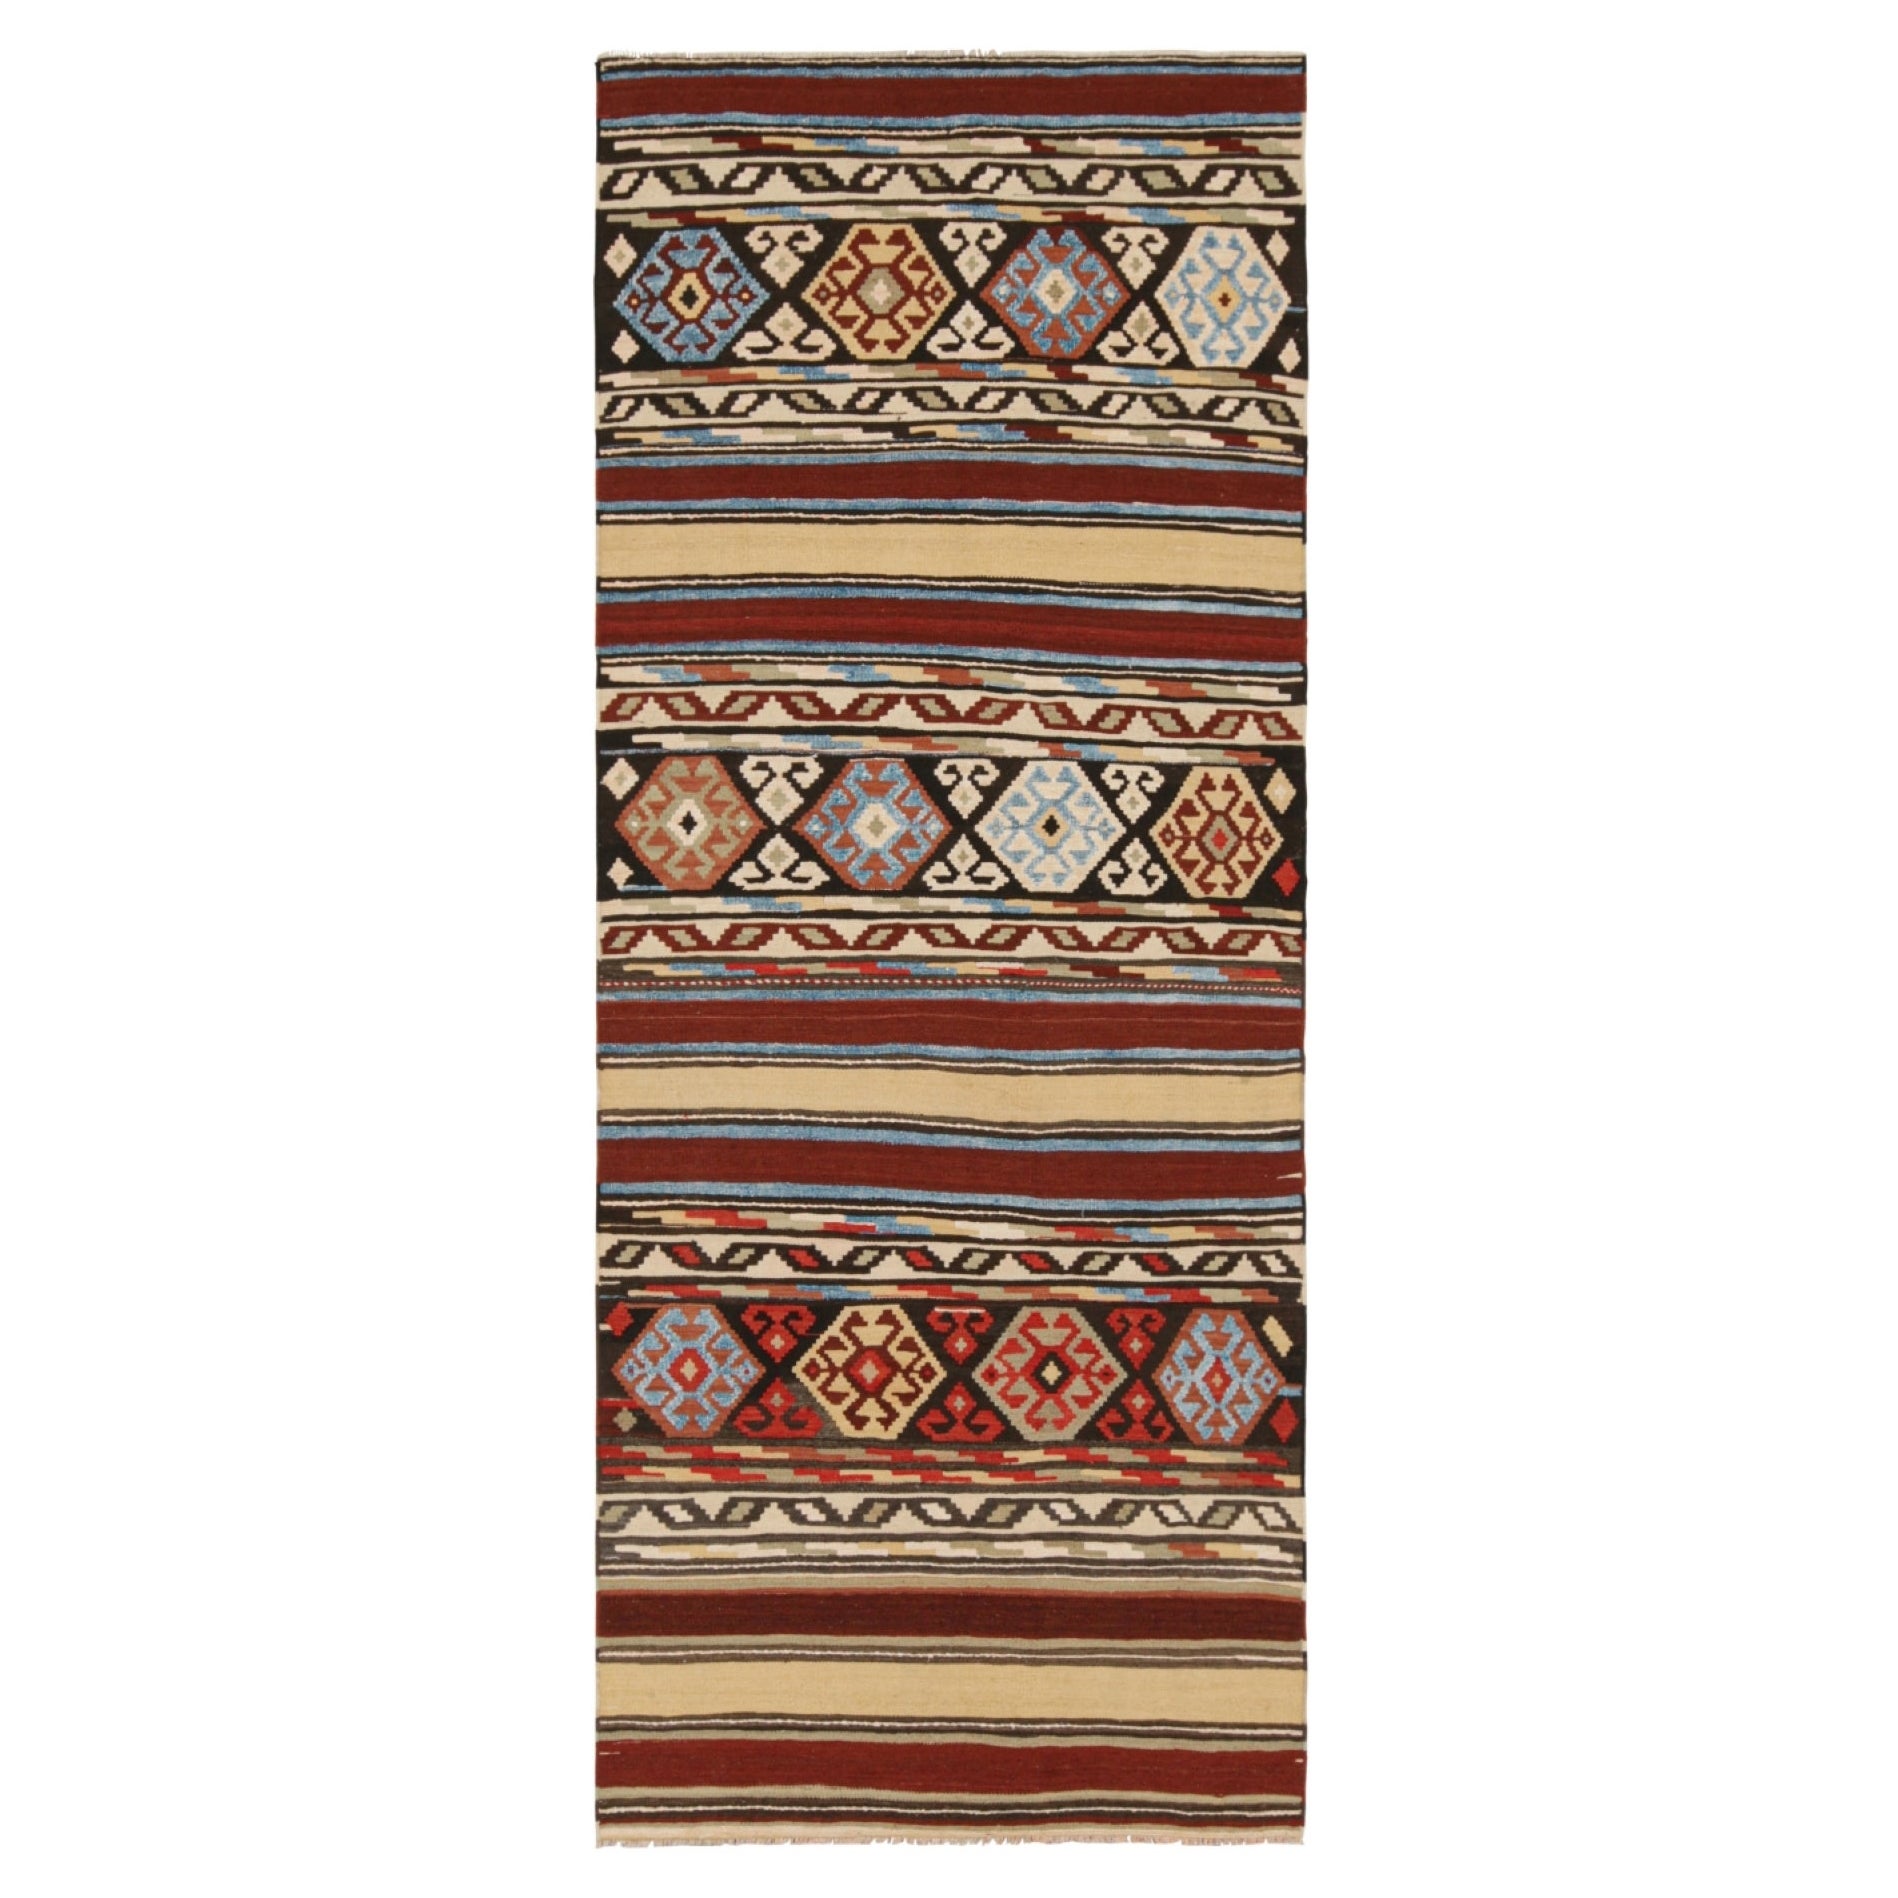 Vintage Shahsavan Persian Kilim in Stripes & Geometric Patterns